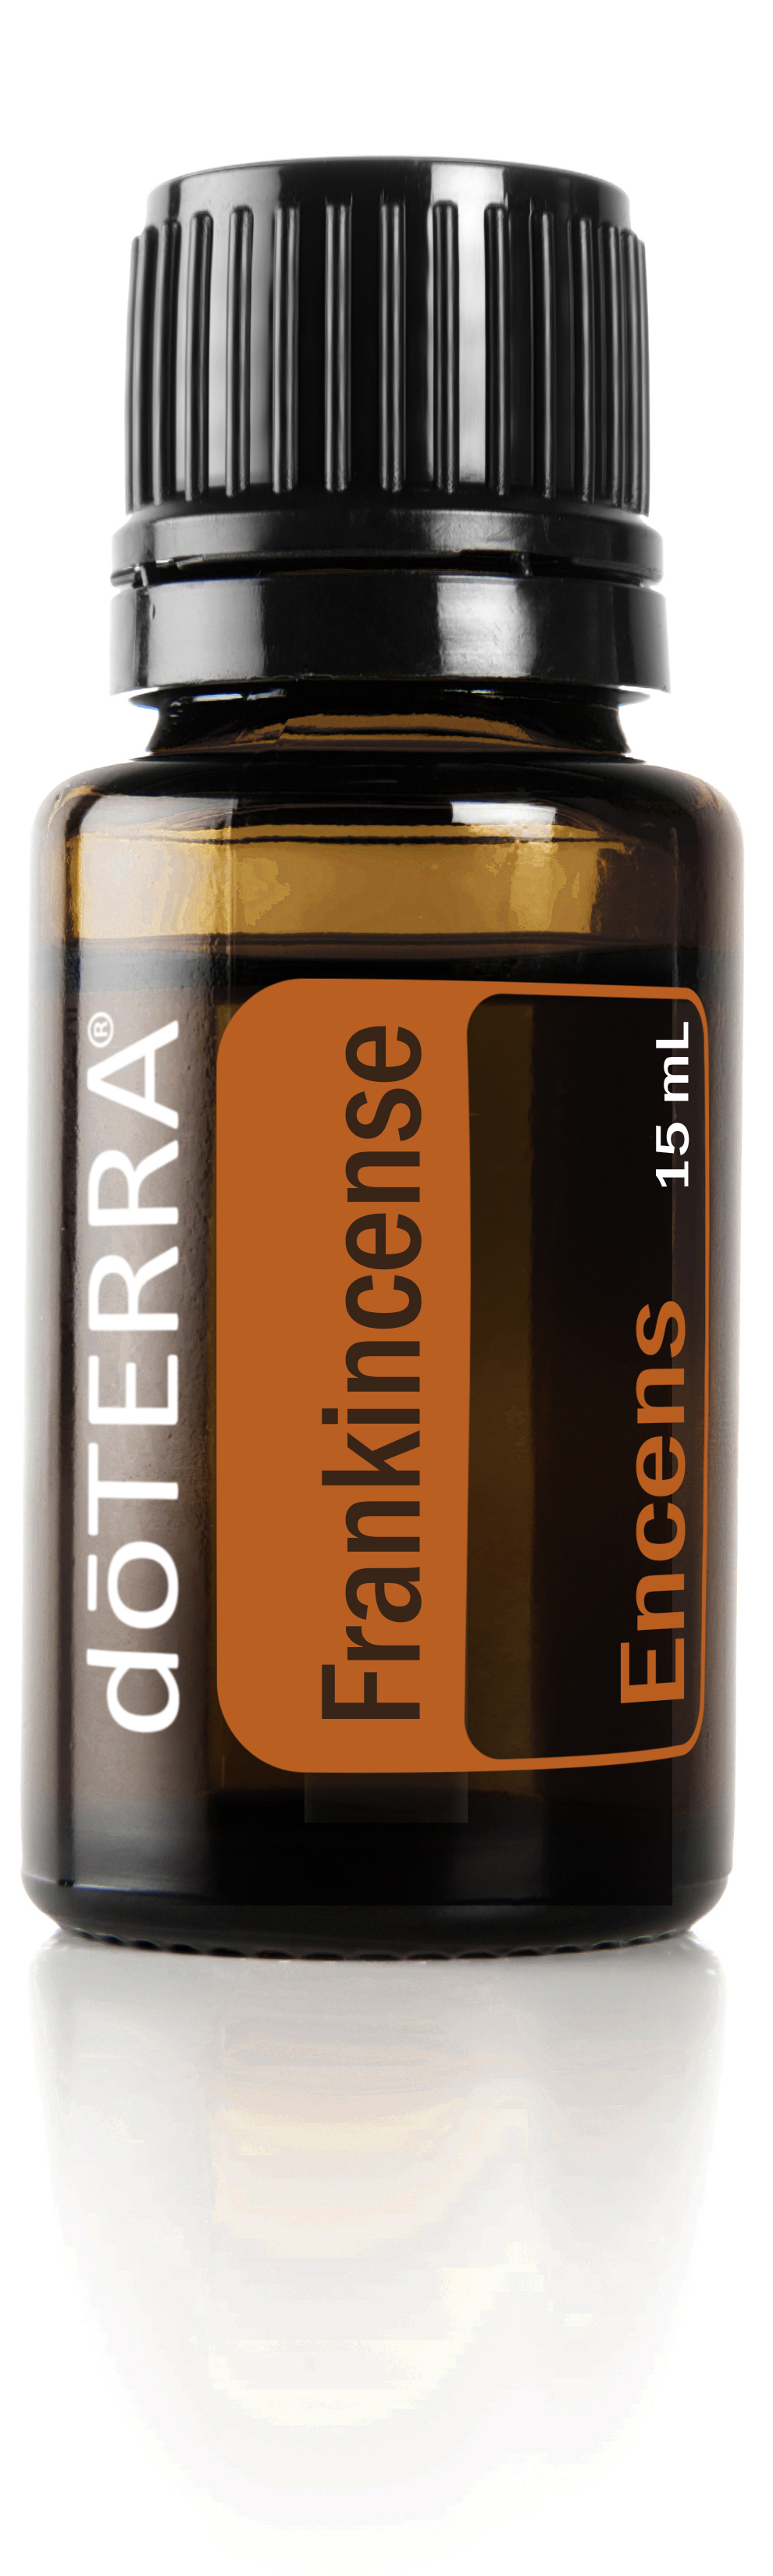 Frankincense Oil | dōTERRA Essential Oils